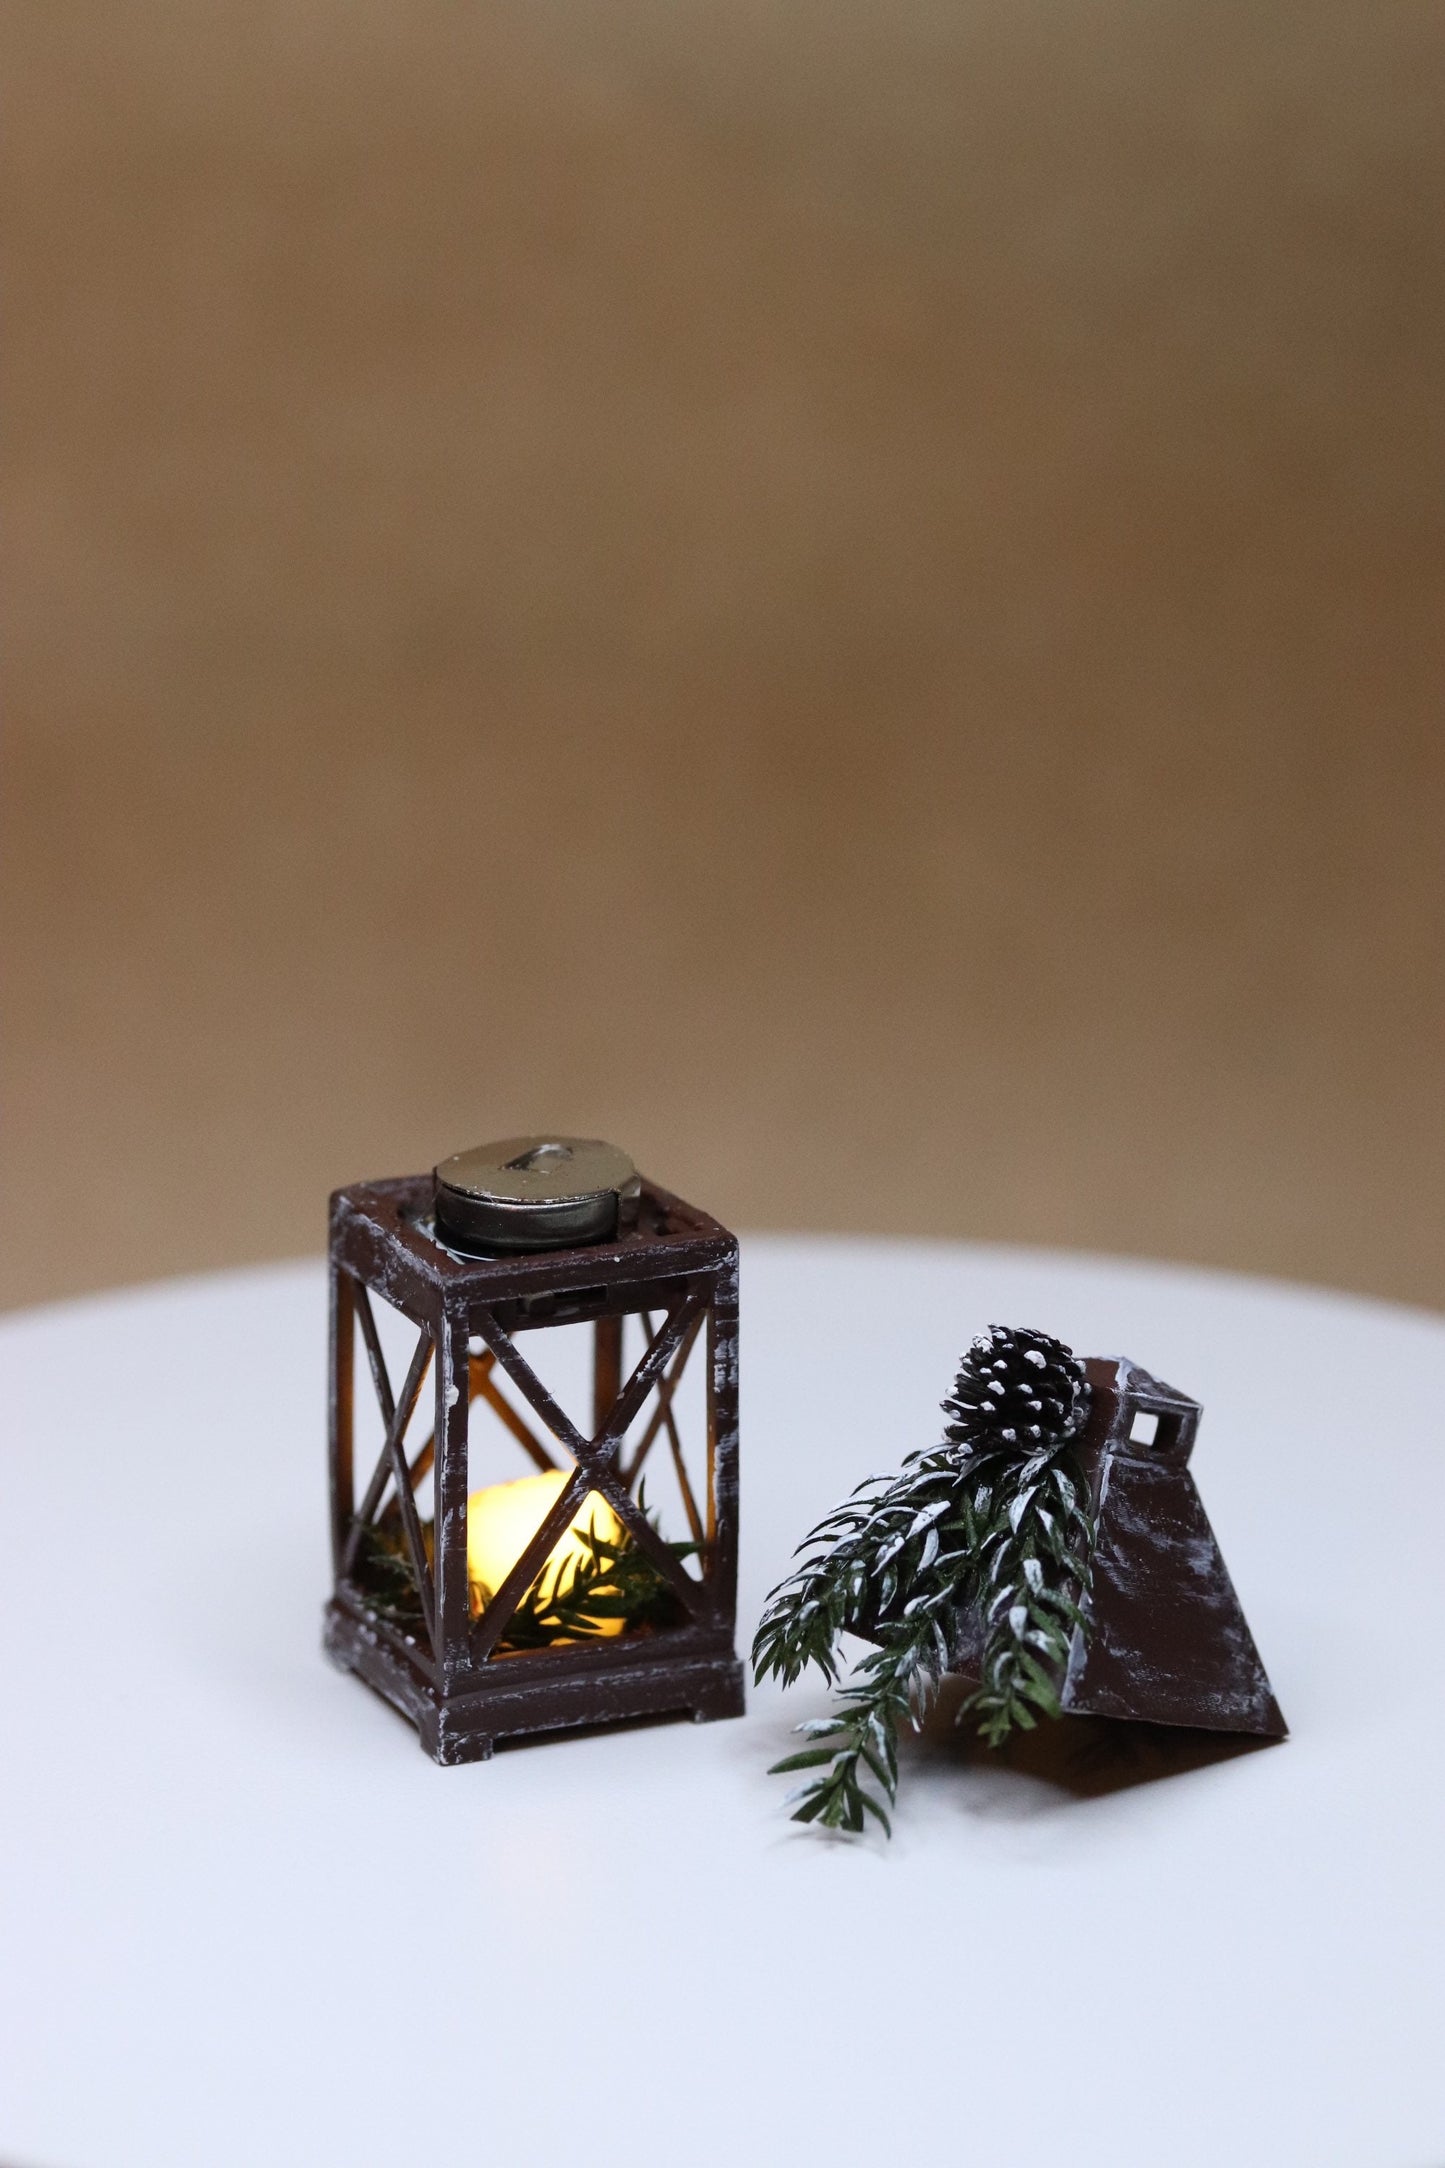 Winter lantern with light